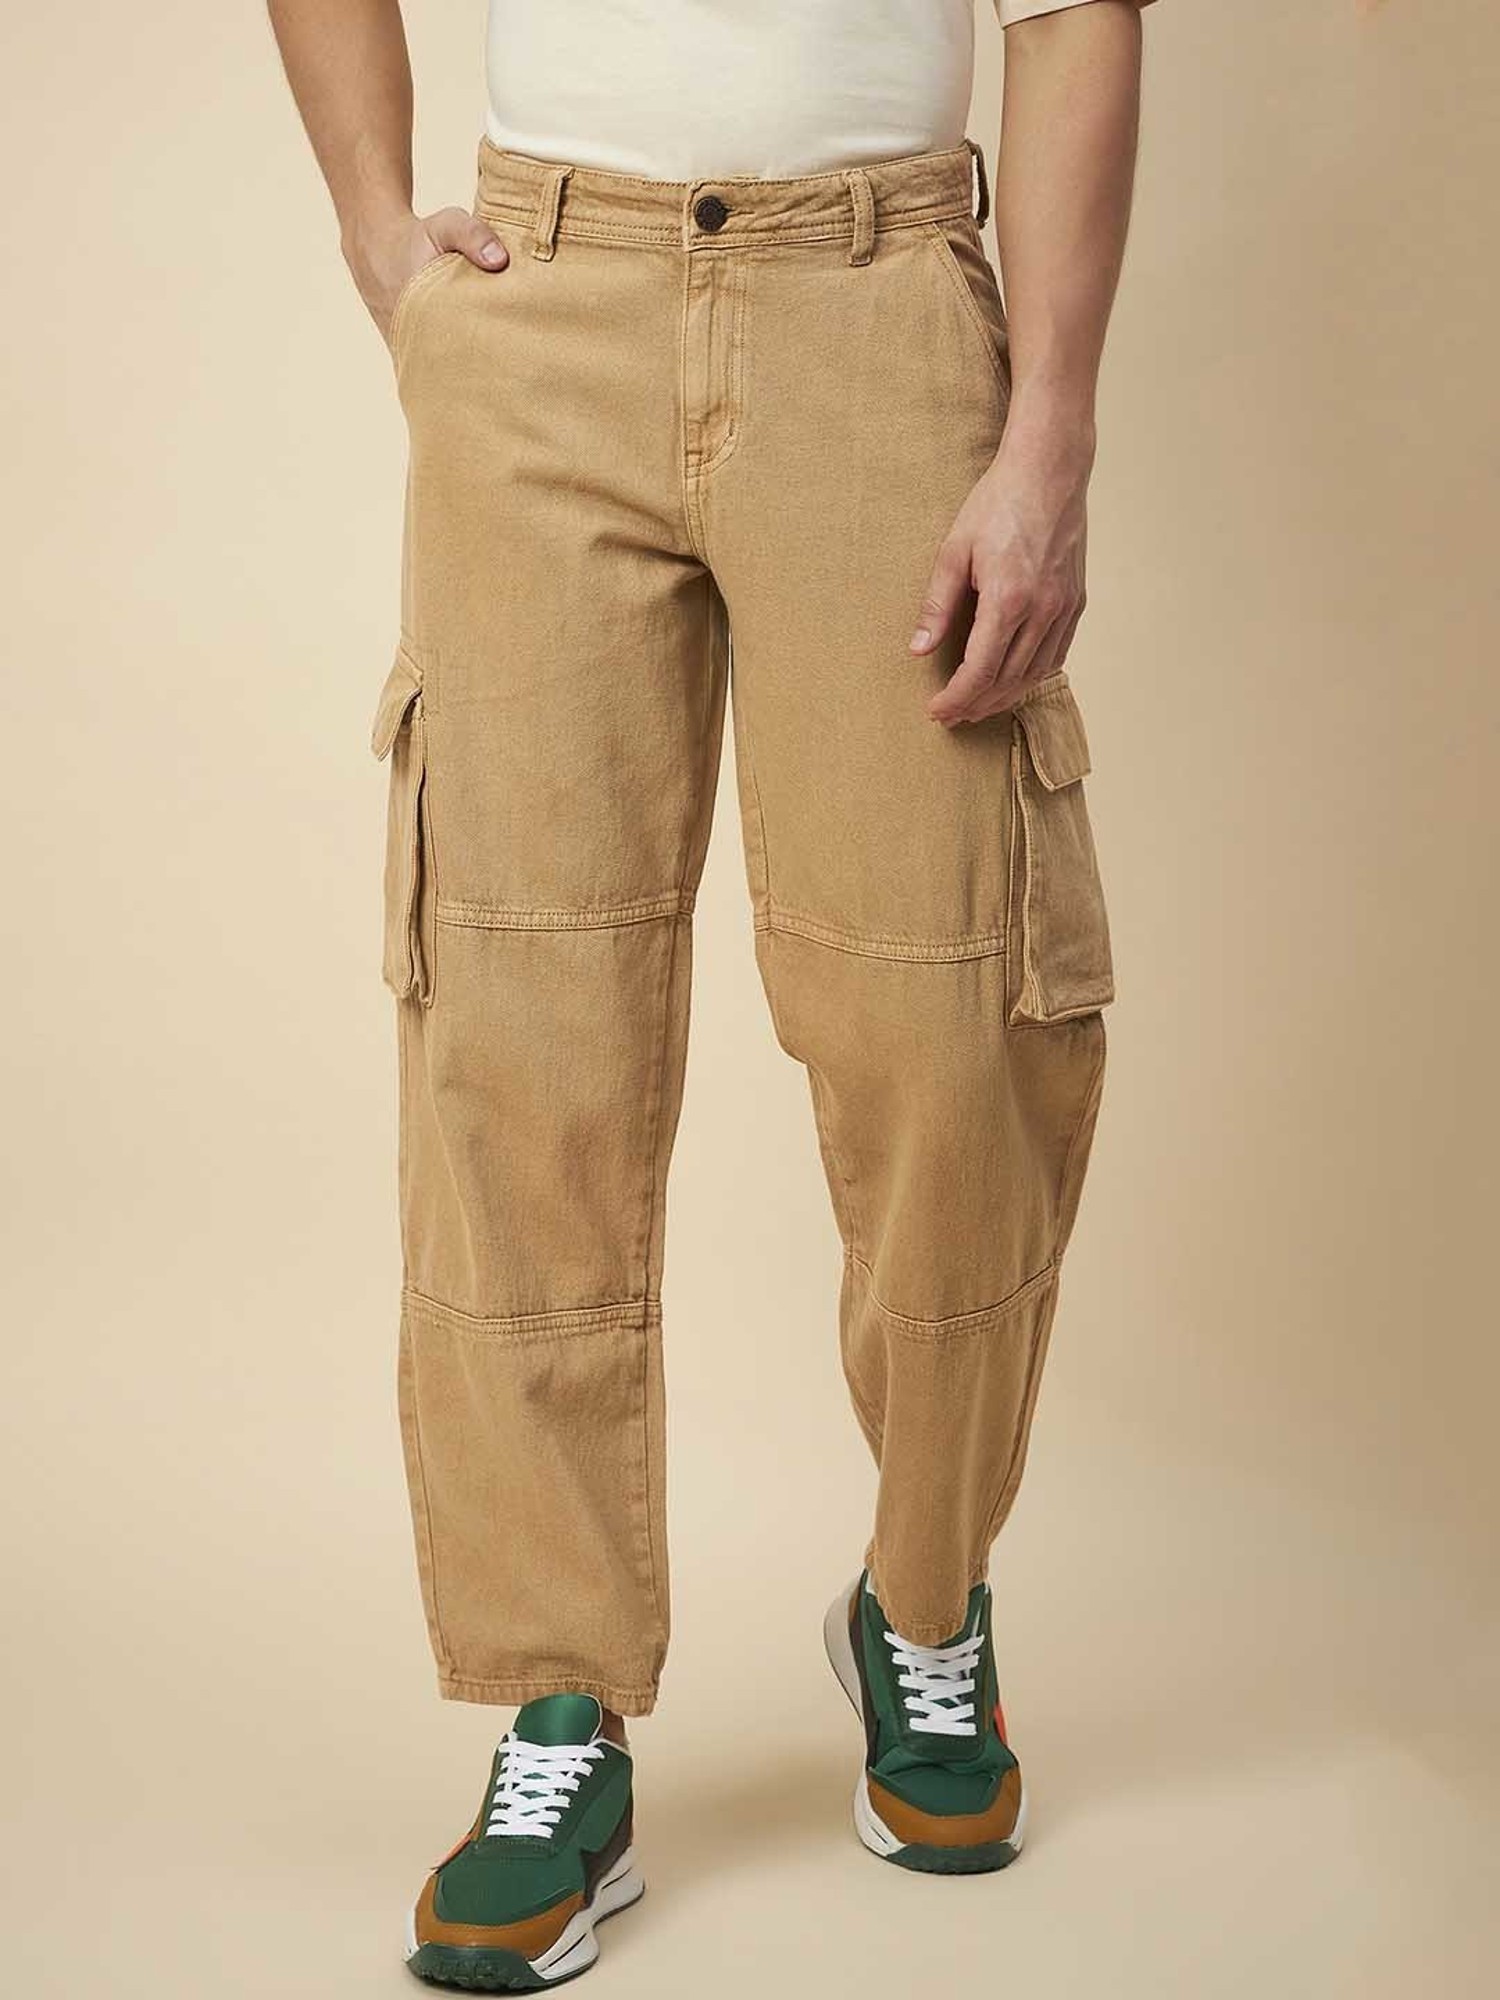 Buy American Swan Men's Khaki Cargo Pants - 40 at Amazon.in